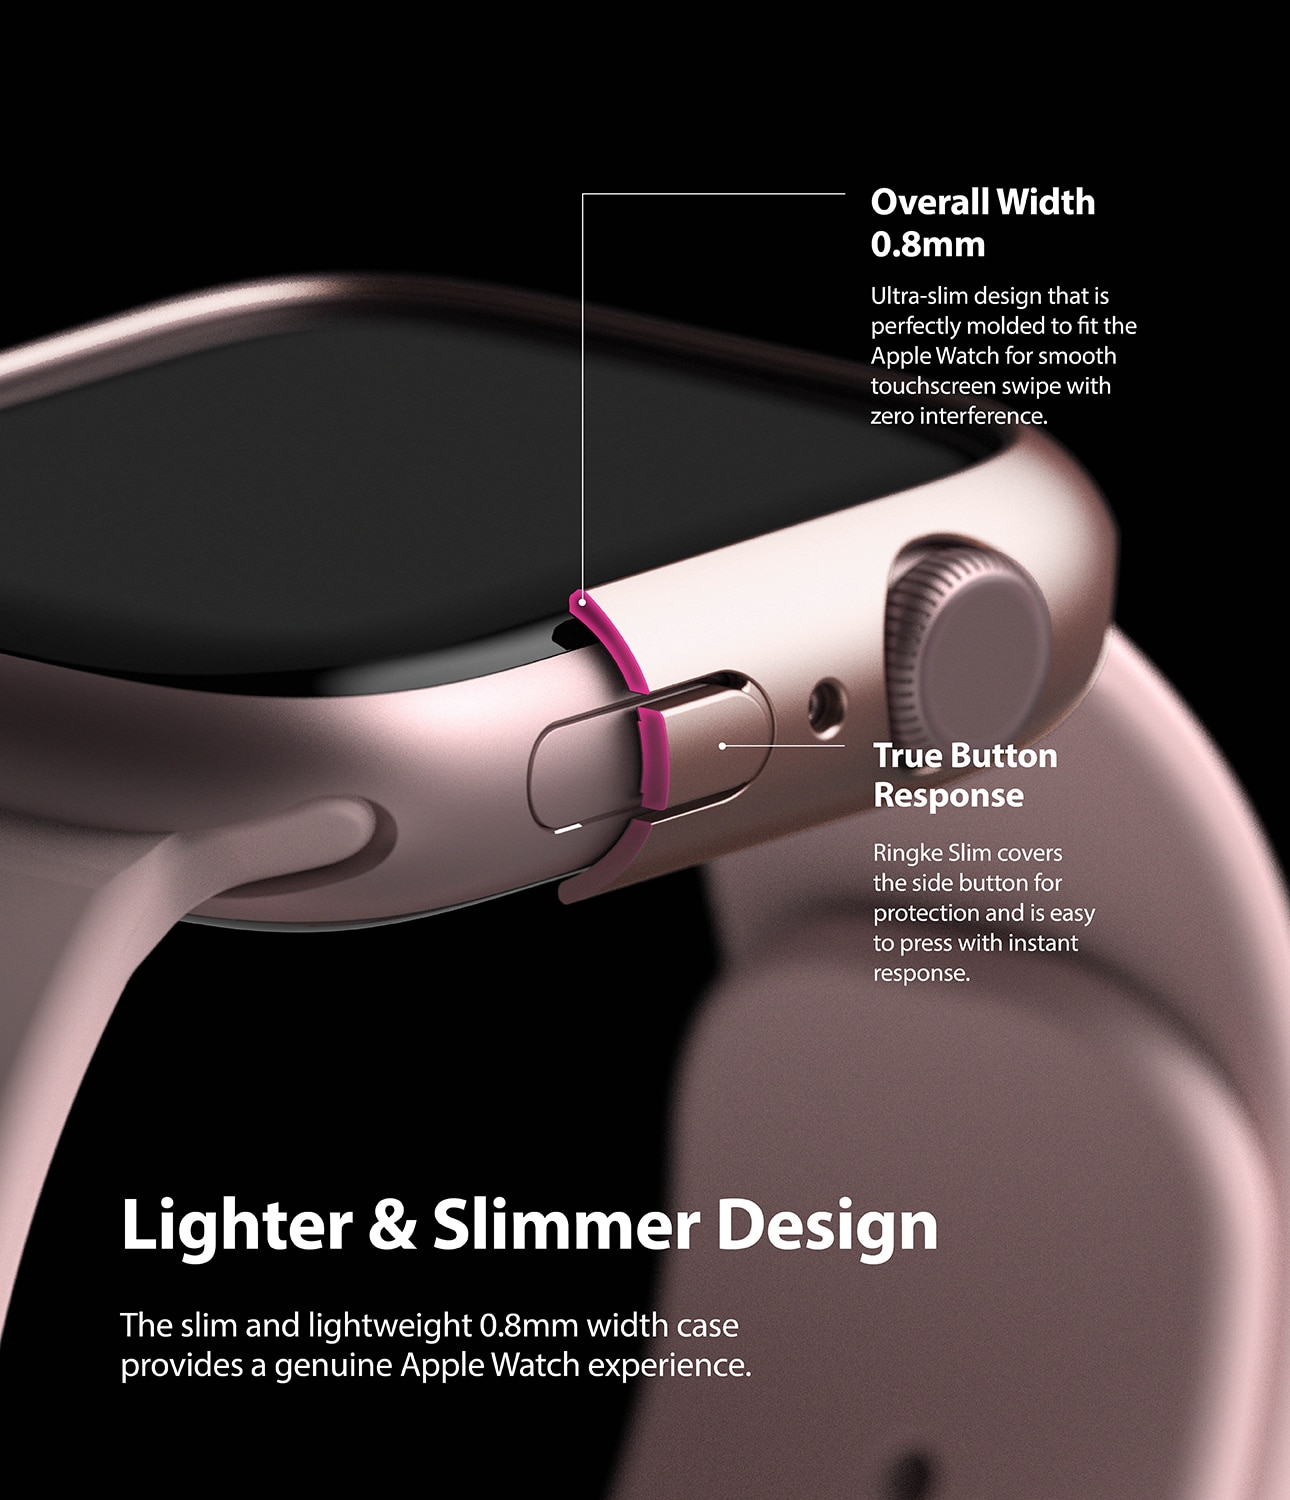 Coque Slim (2 pièces) Apple Watch 45mm Series 9, Pink & Clear